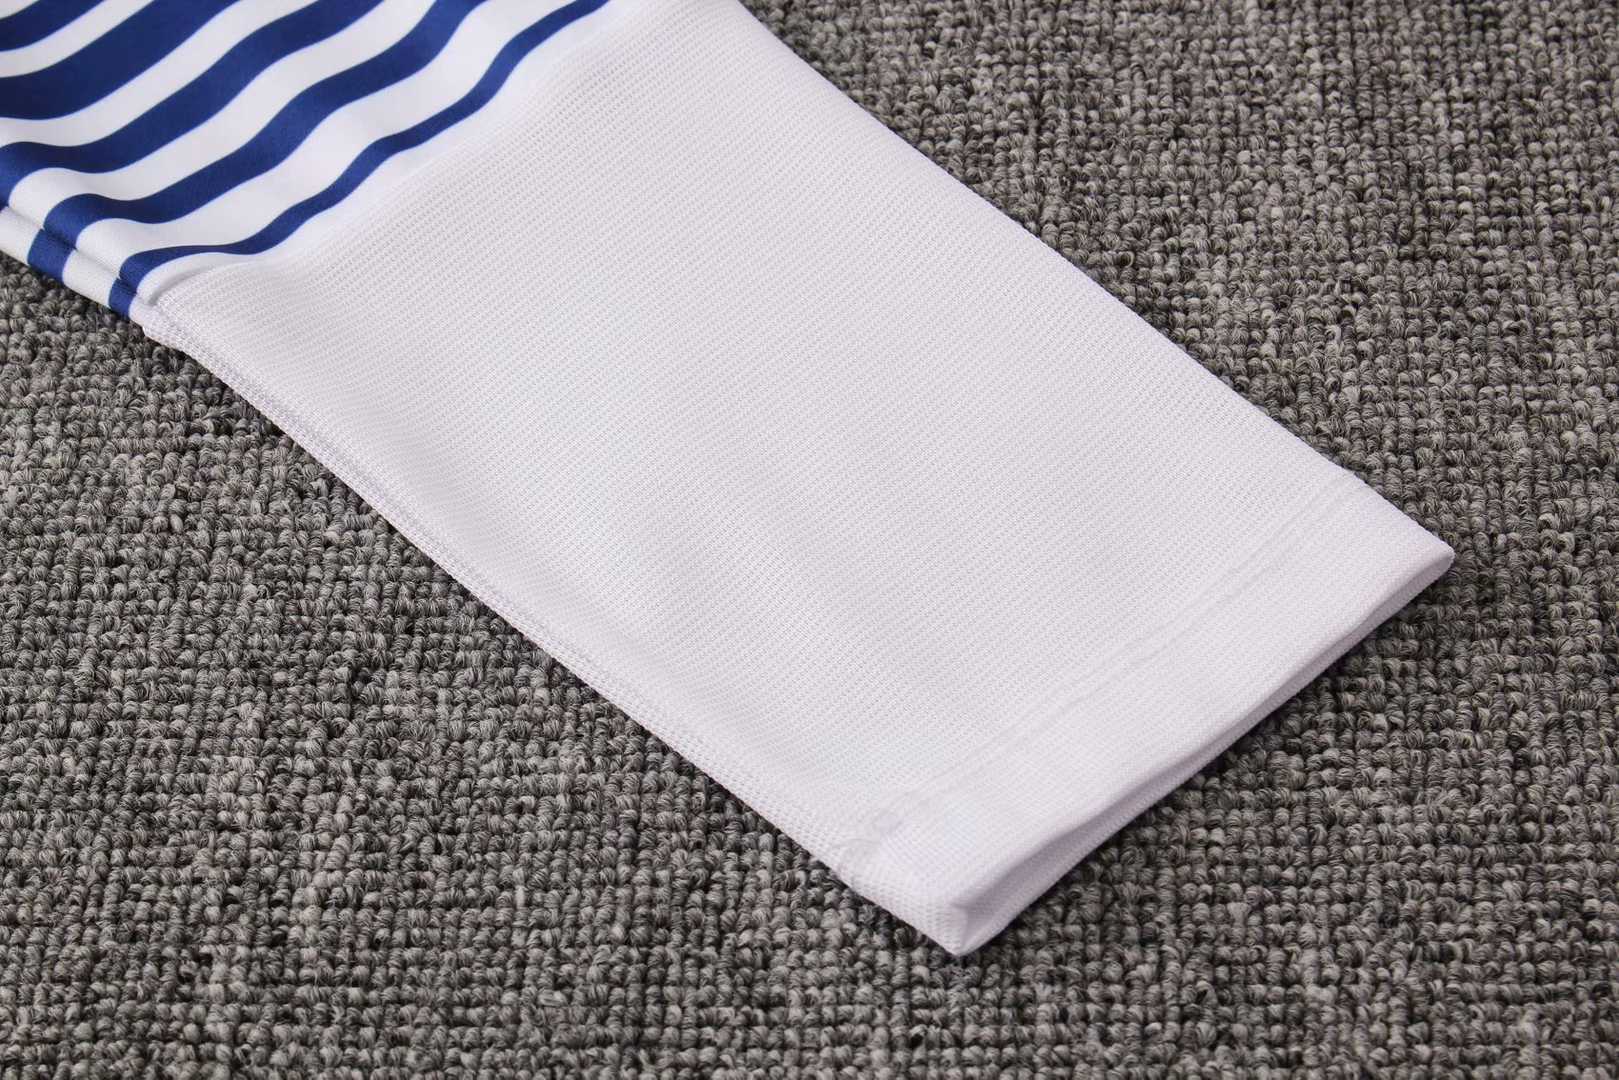 2019/20 France White Stripe Mens Soccer Training Suit(Jacket + Pants)